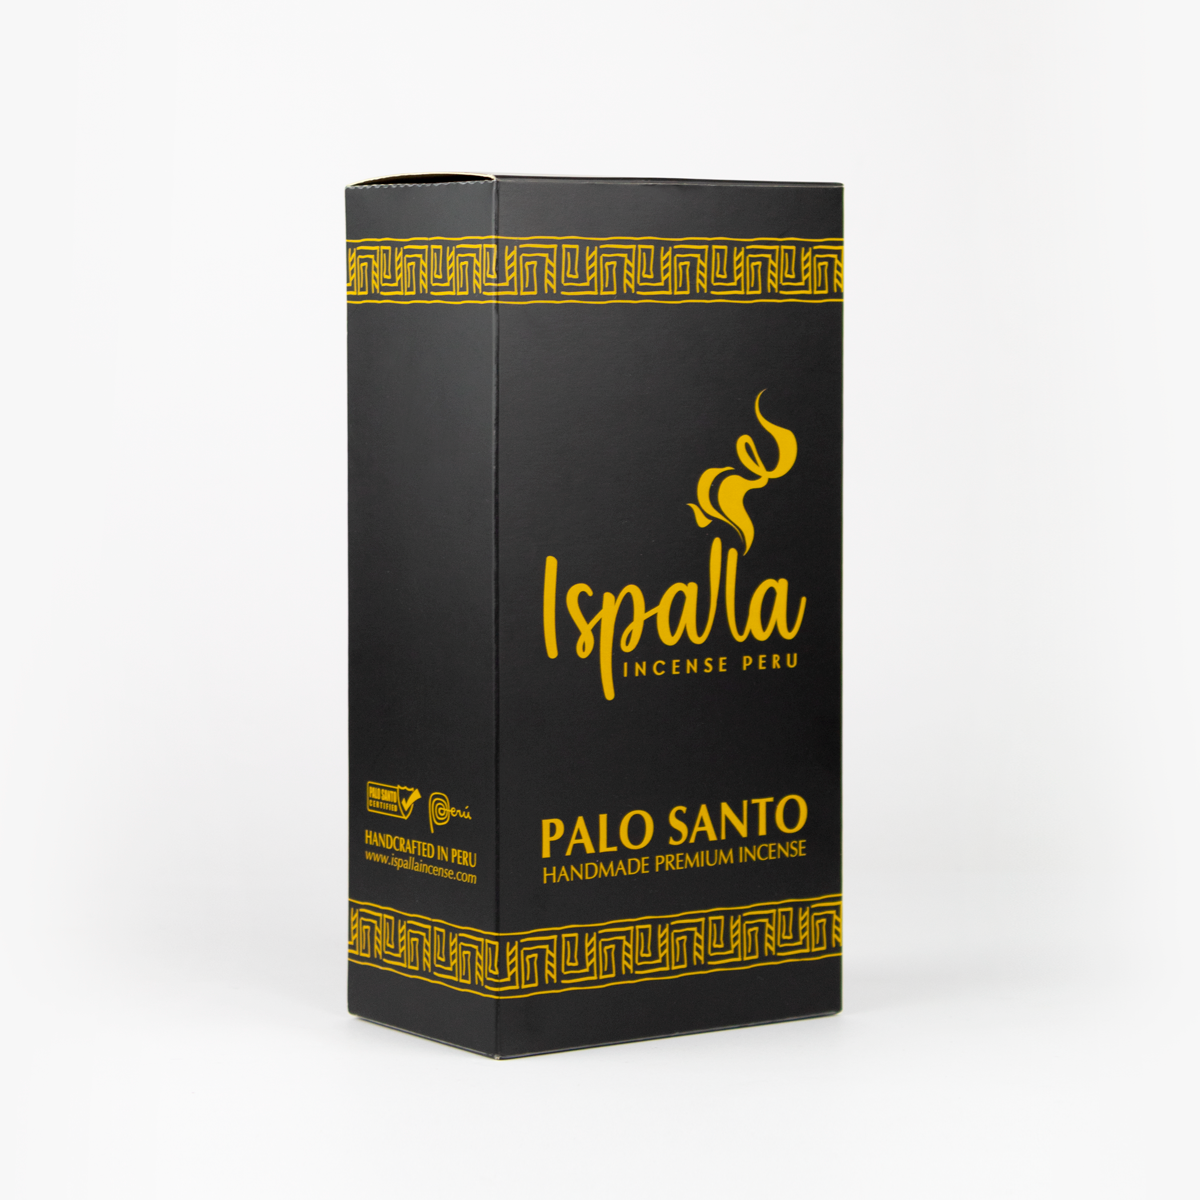 Isapalla Incense - Palo Santo